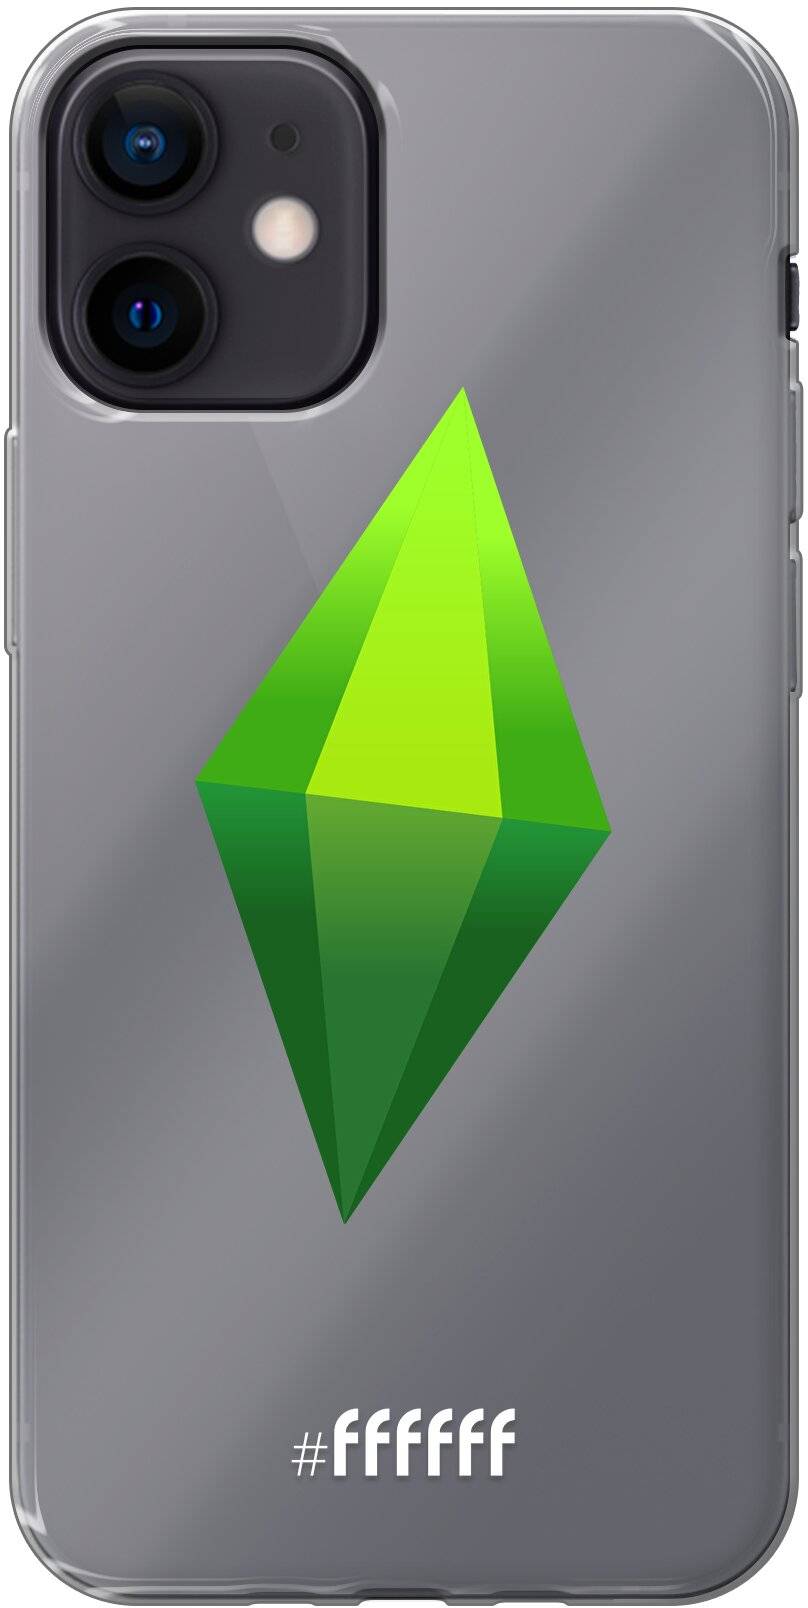 The Sims iPhone 12 Mini